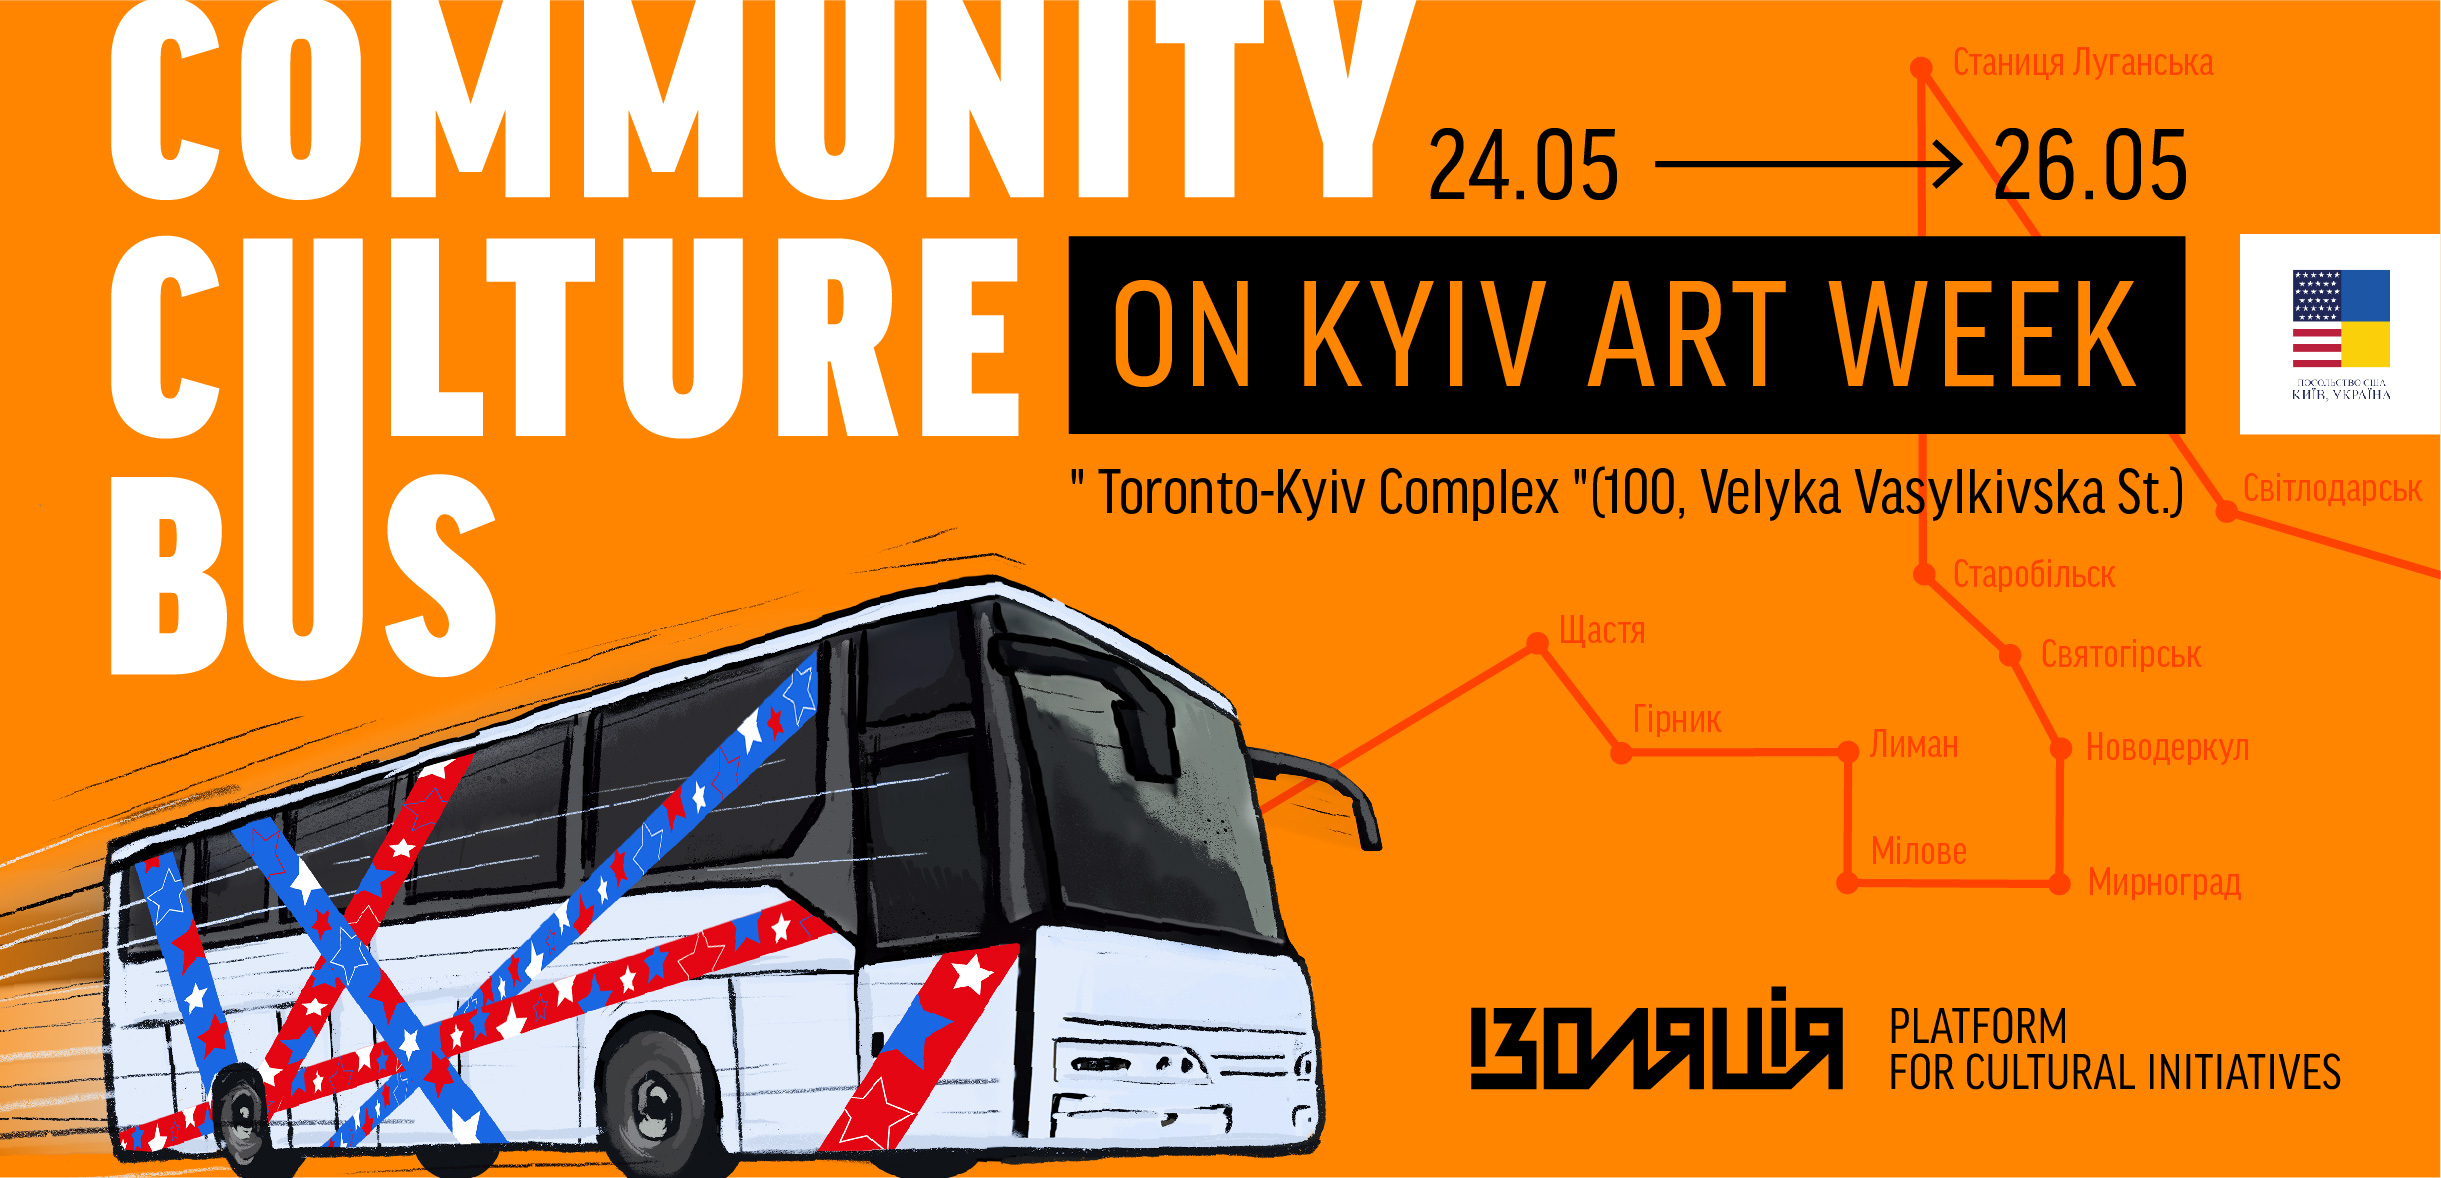 Community Culture Bus on Kyiv Art Week